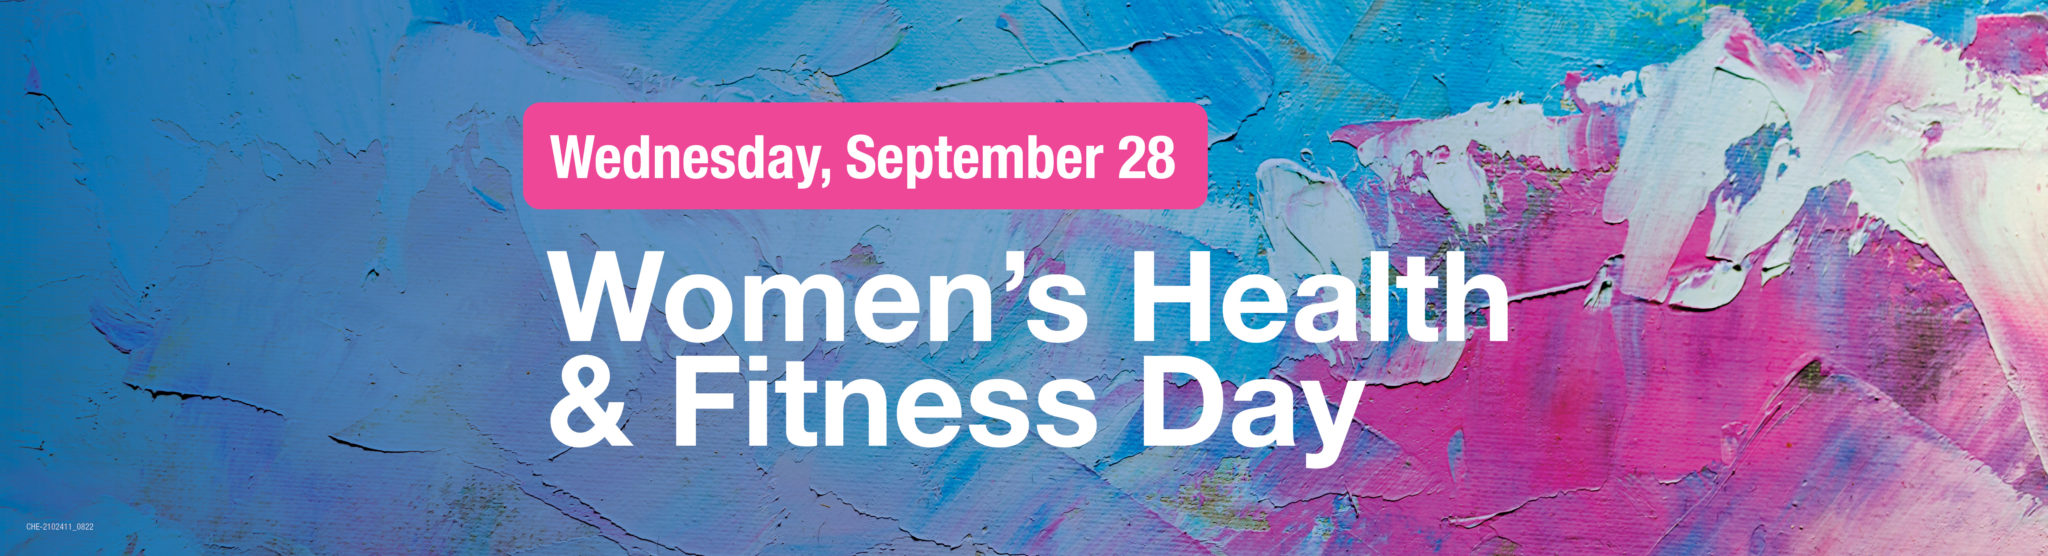 Women’s Health & Fitness Day